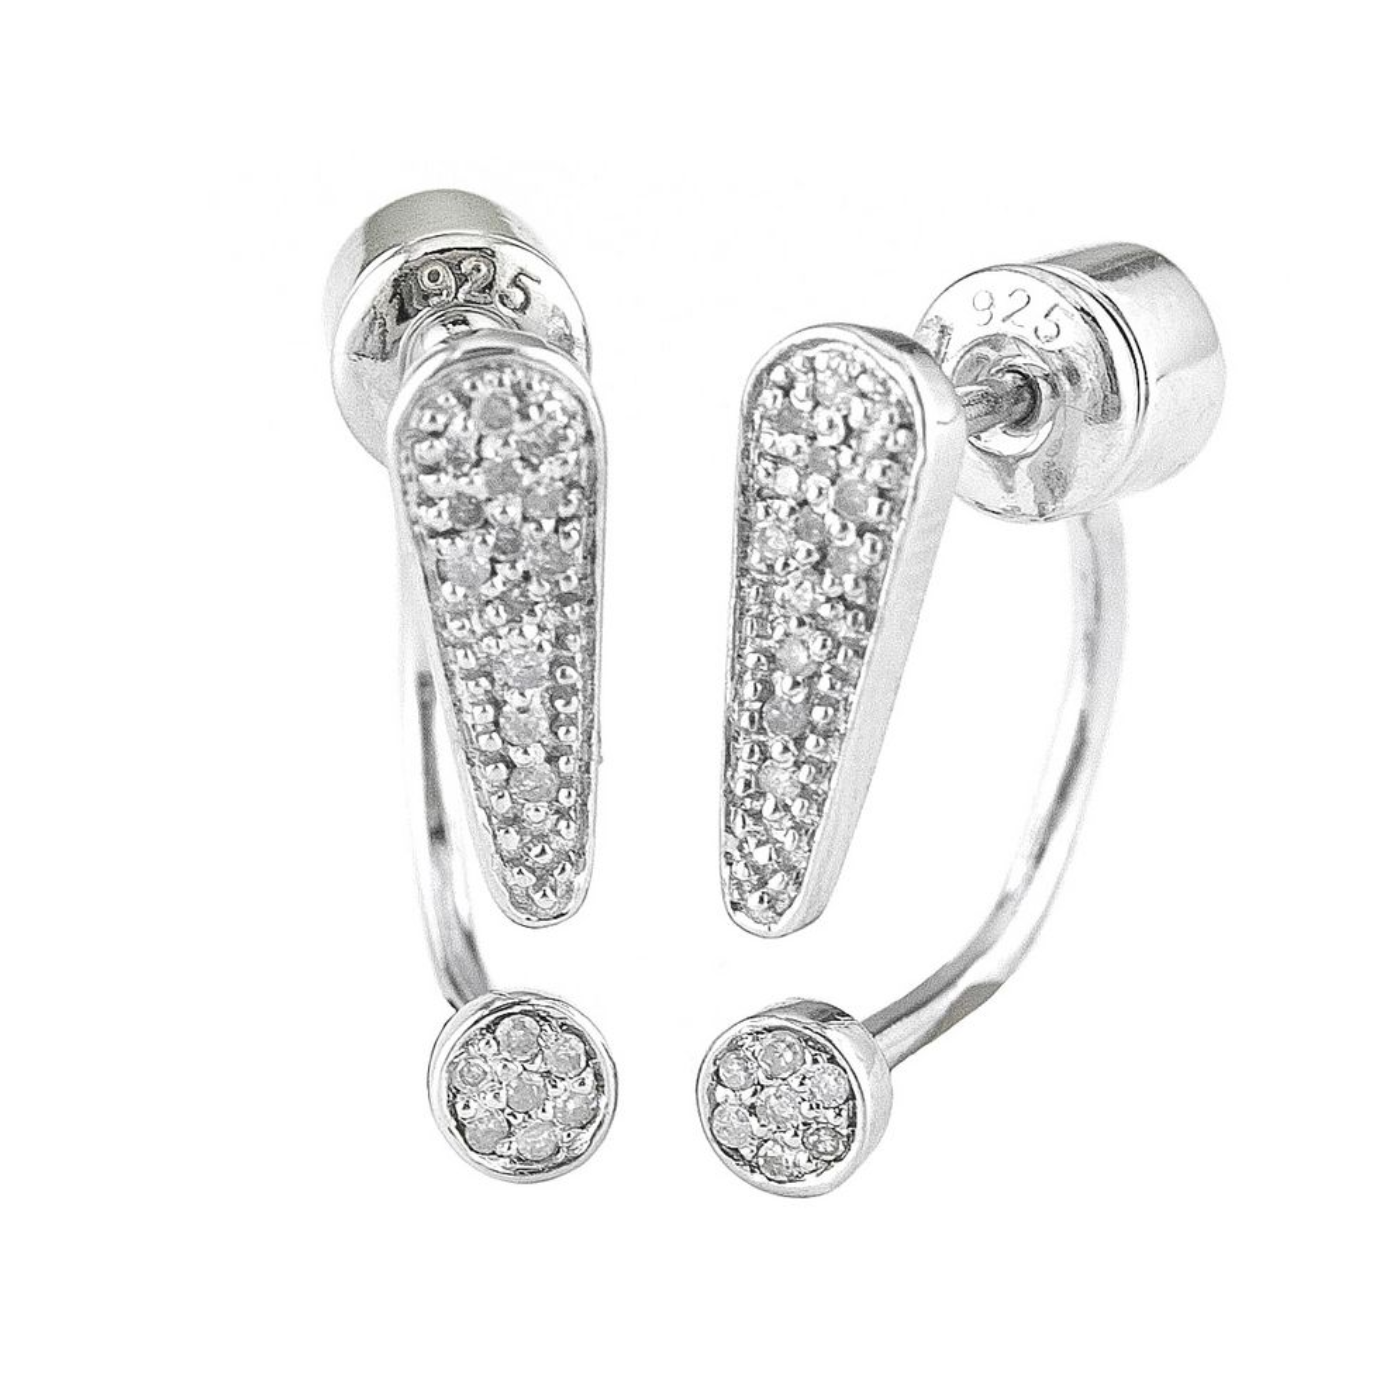 Peek-A-Boo Single Pave Diamond Earrings